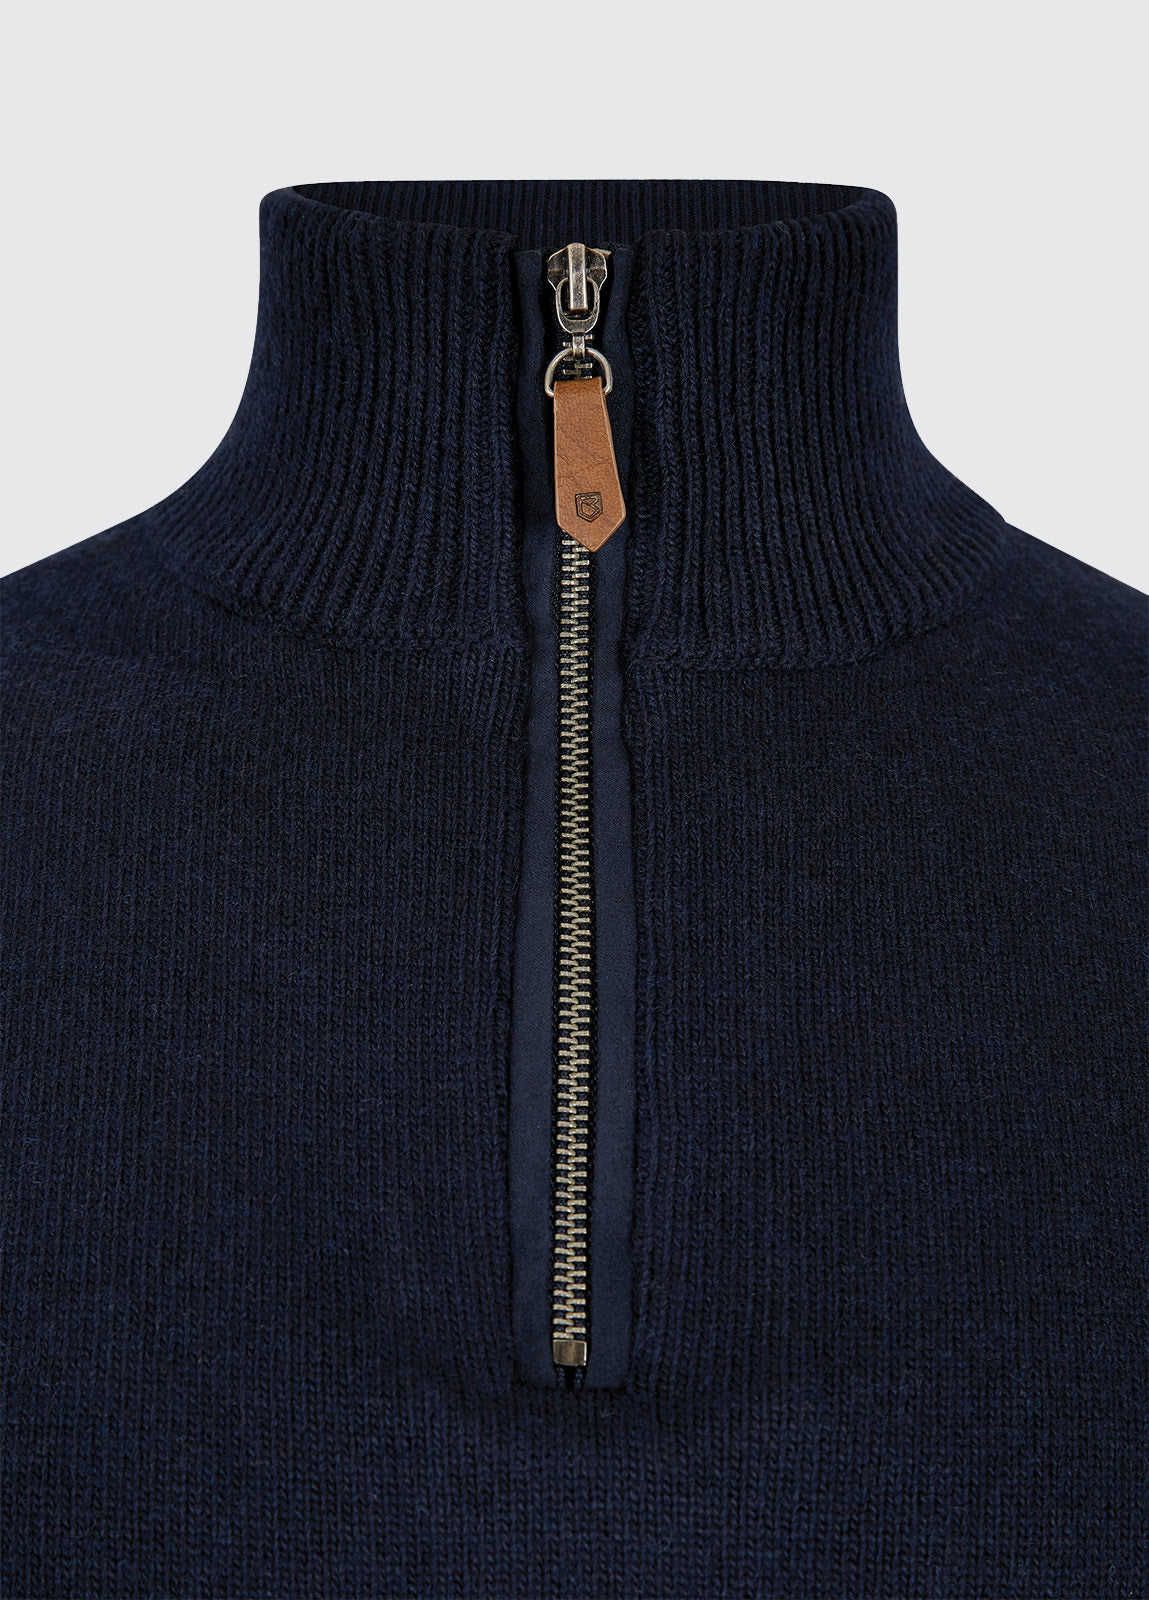 Dubarry Feeney Zip Neck Sweater - Navy